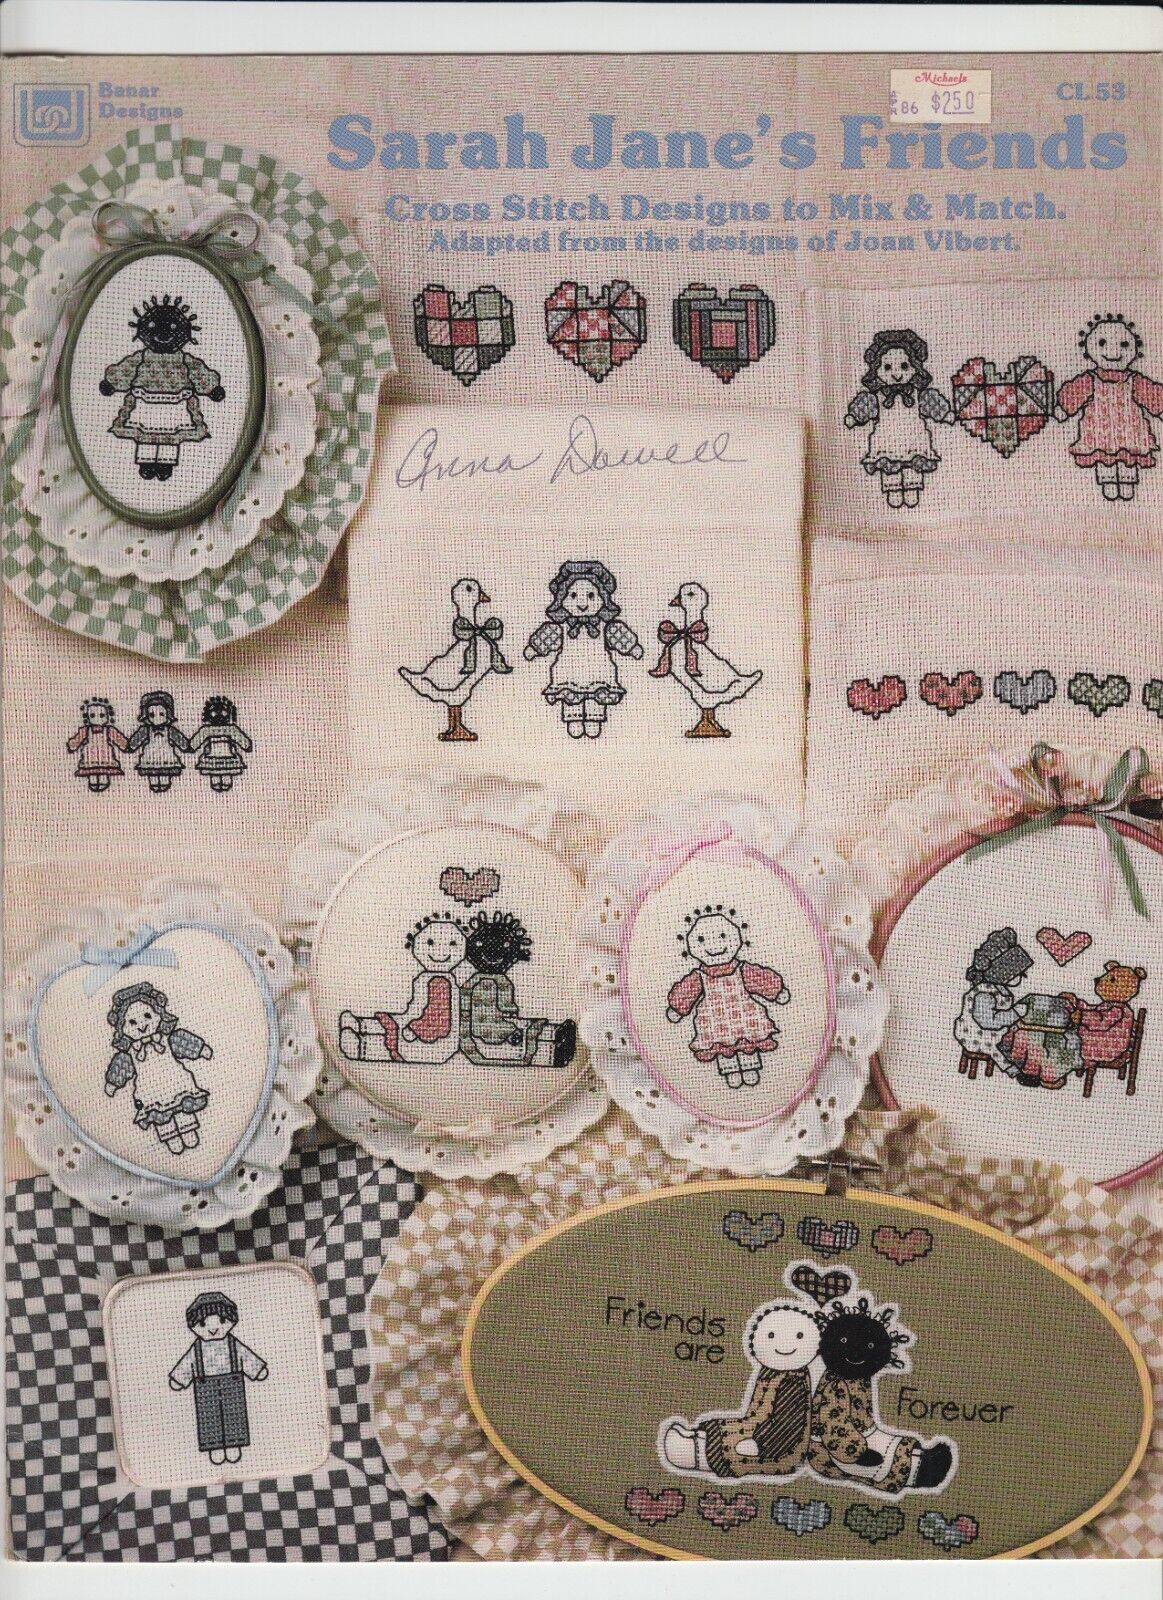 Sarah Jane's Friends Cross Stitch Pattern Booklet CL53 Banar Designs Joan Vibert - $7.84